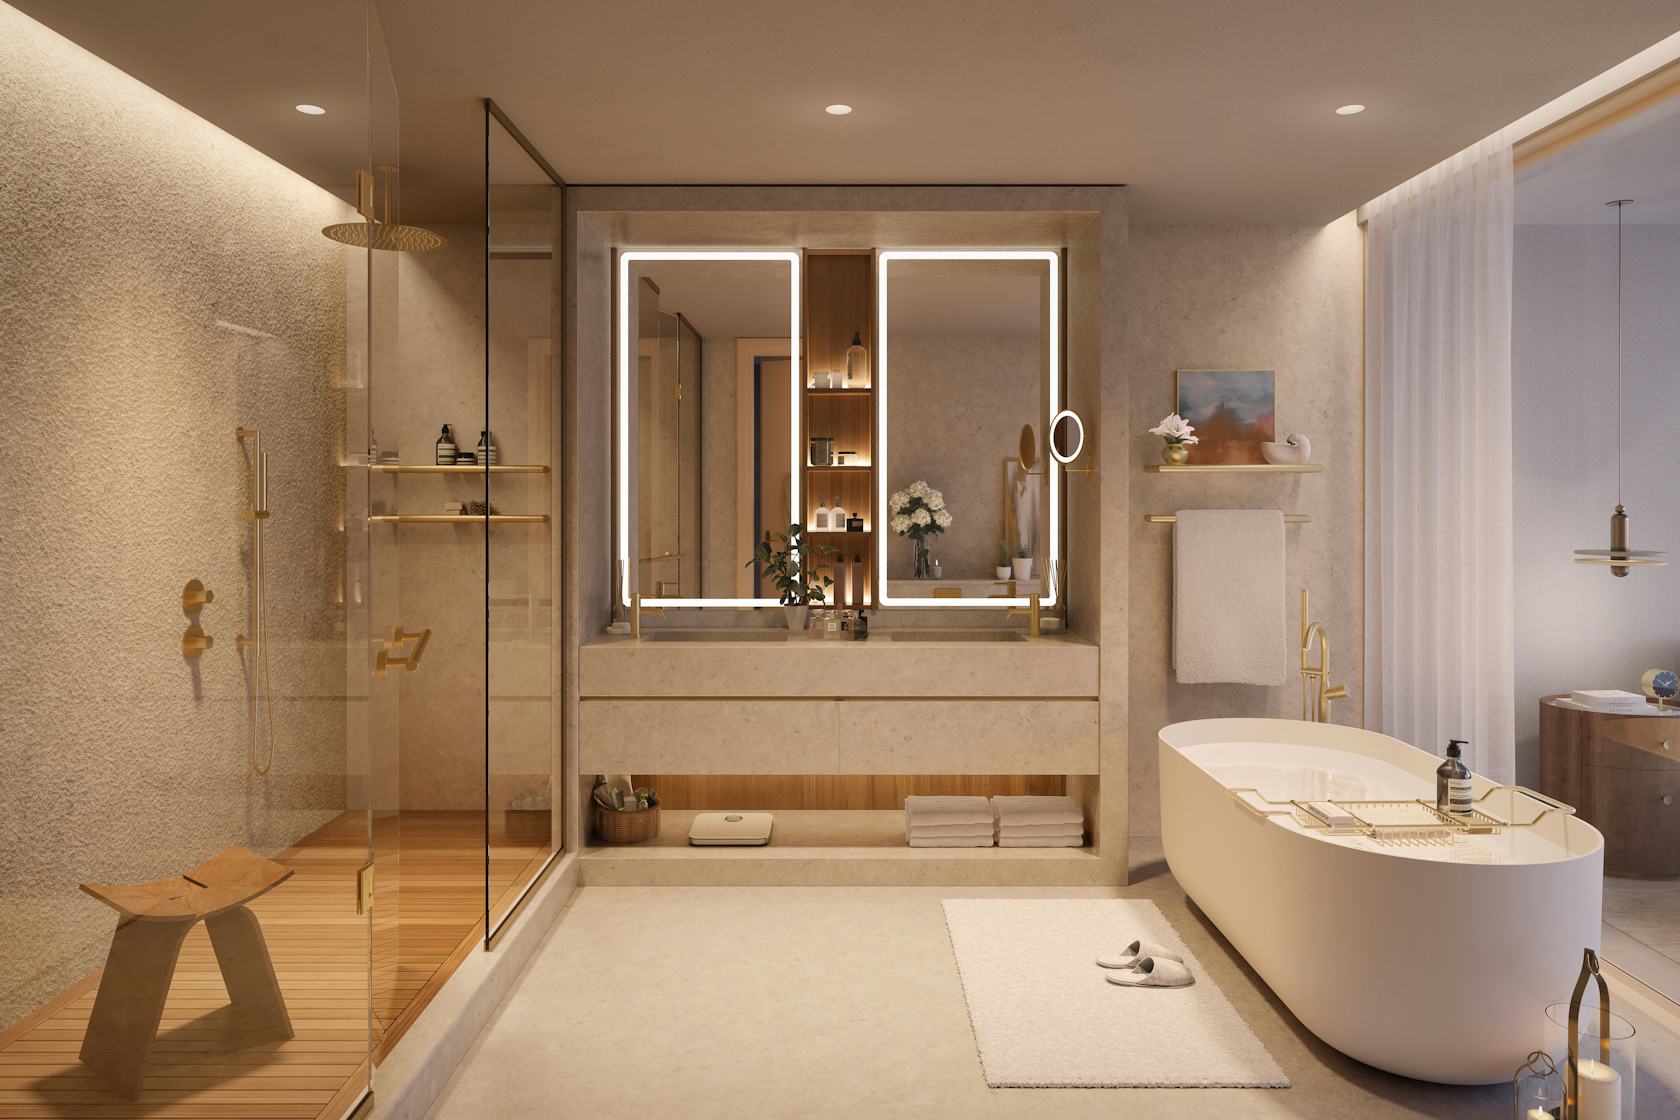 interior design indoors bathing bathtub tub person flooring floor rug home decor